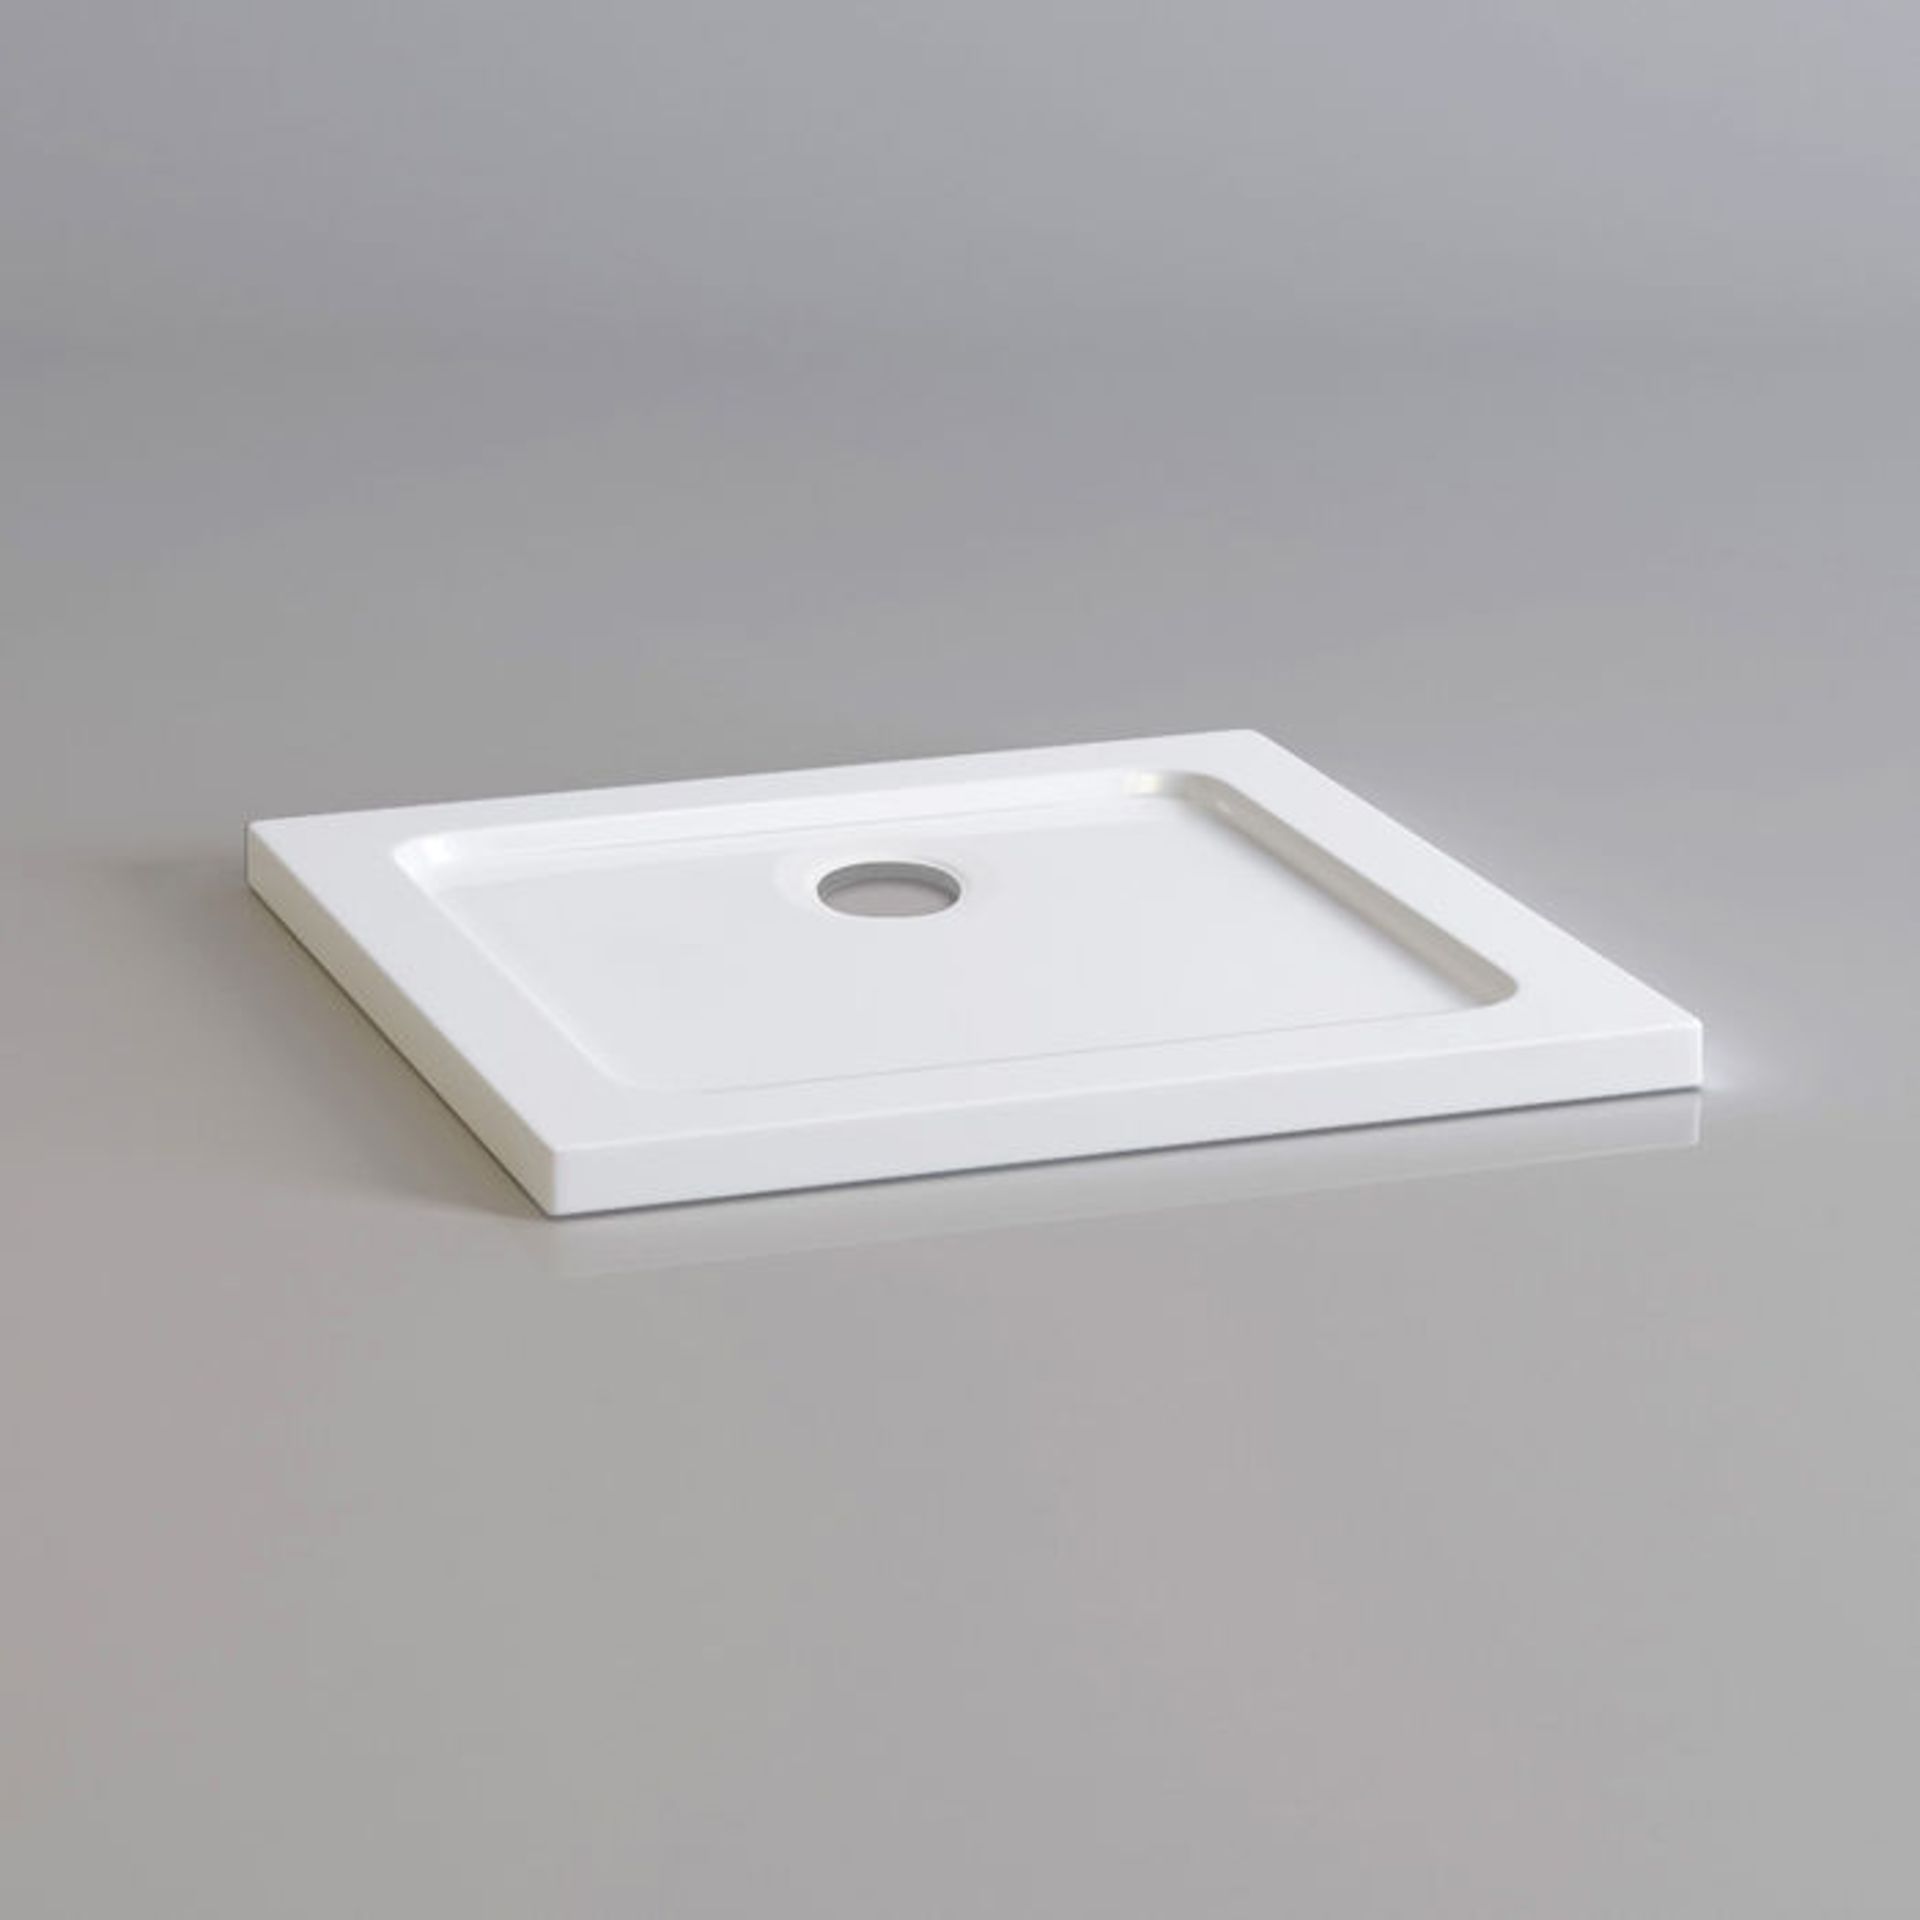 (AH215) 700x700mm Square Ultra Slim Stone Shower Tray. Low profile ultra slim design Gel coated